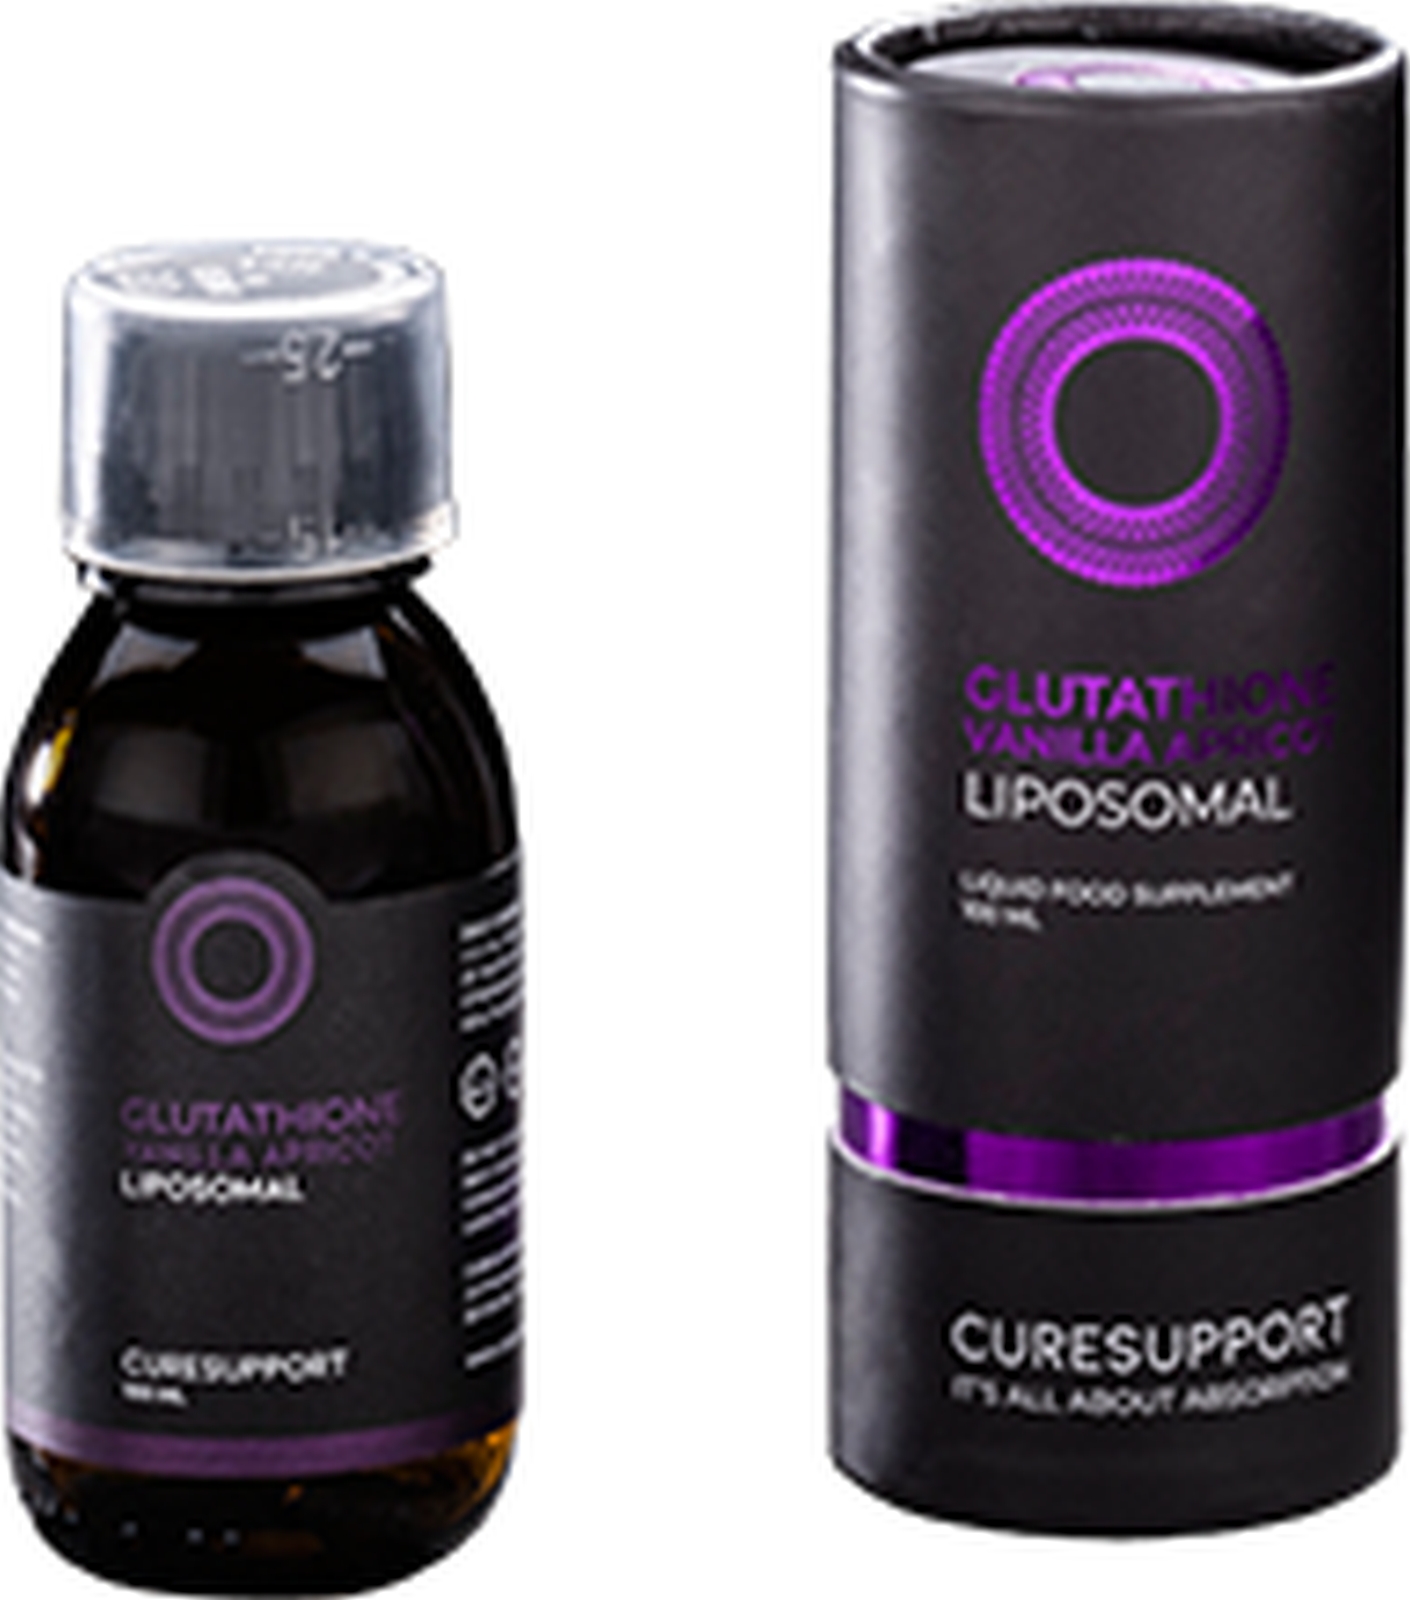 CureSupport Glutathion Vanille-Aprikose Liposomal